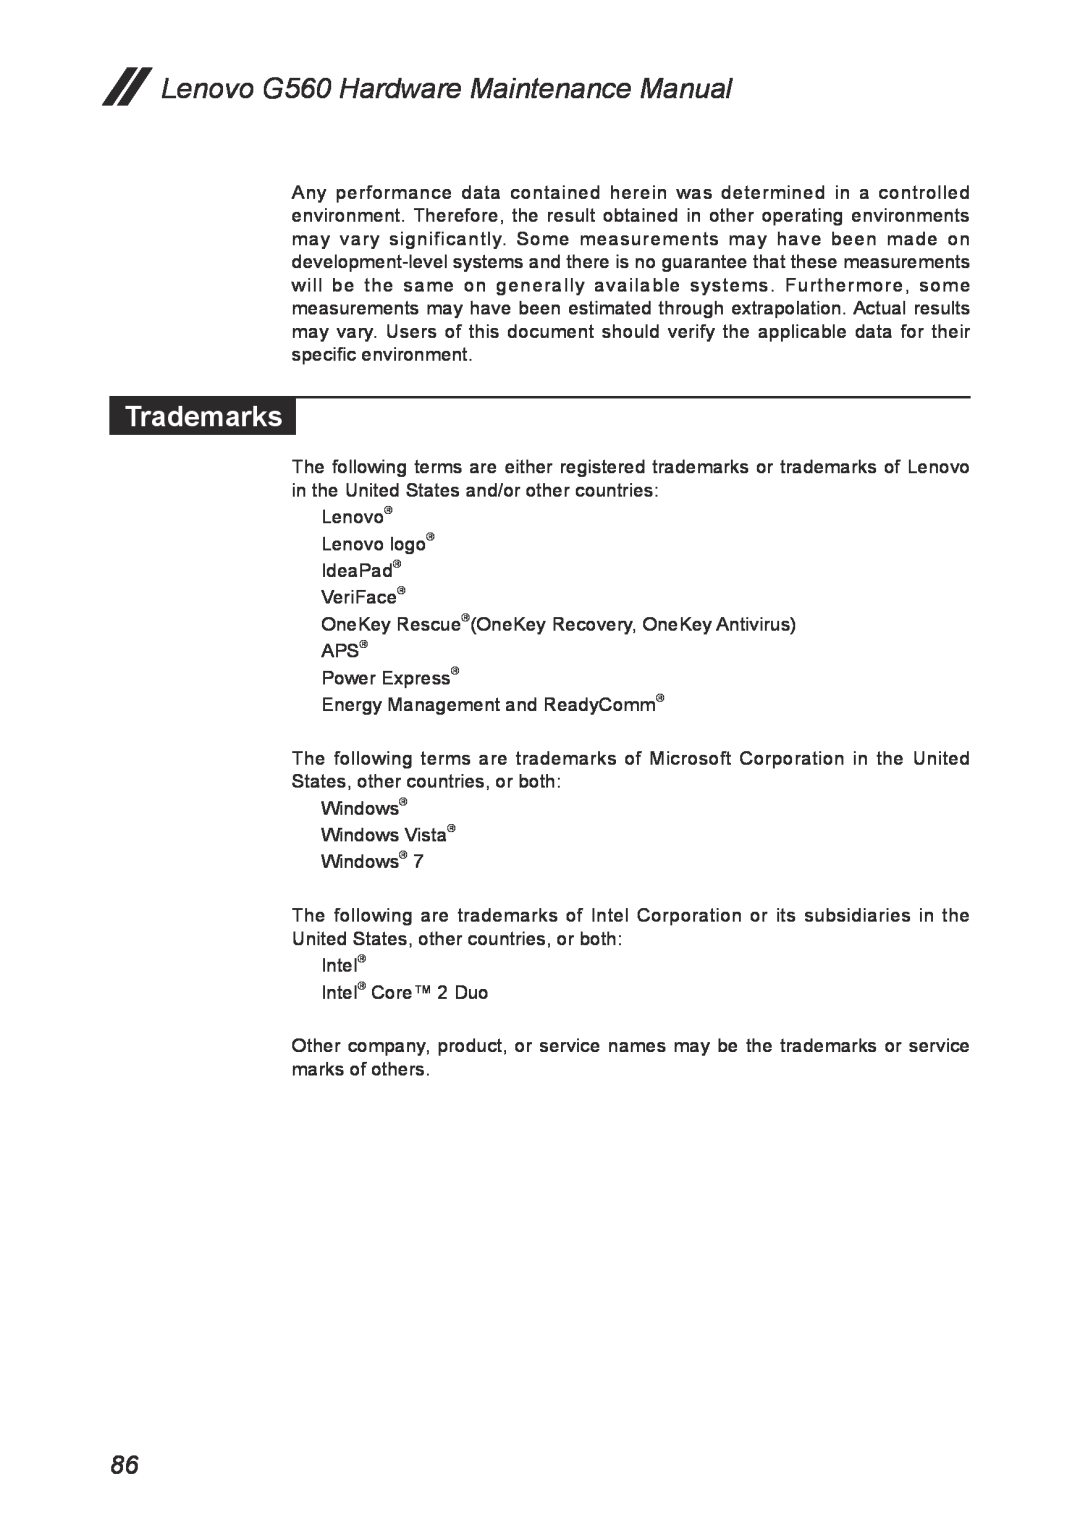 Lenovo manual Trademarks, Lenovo G560 Hardware Maintenance Manual 